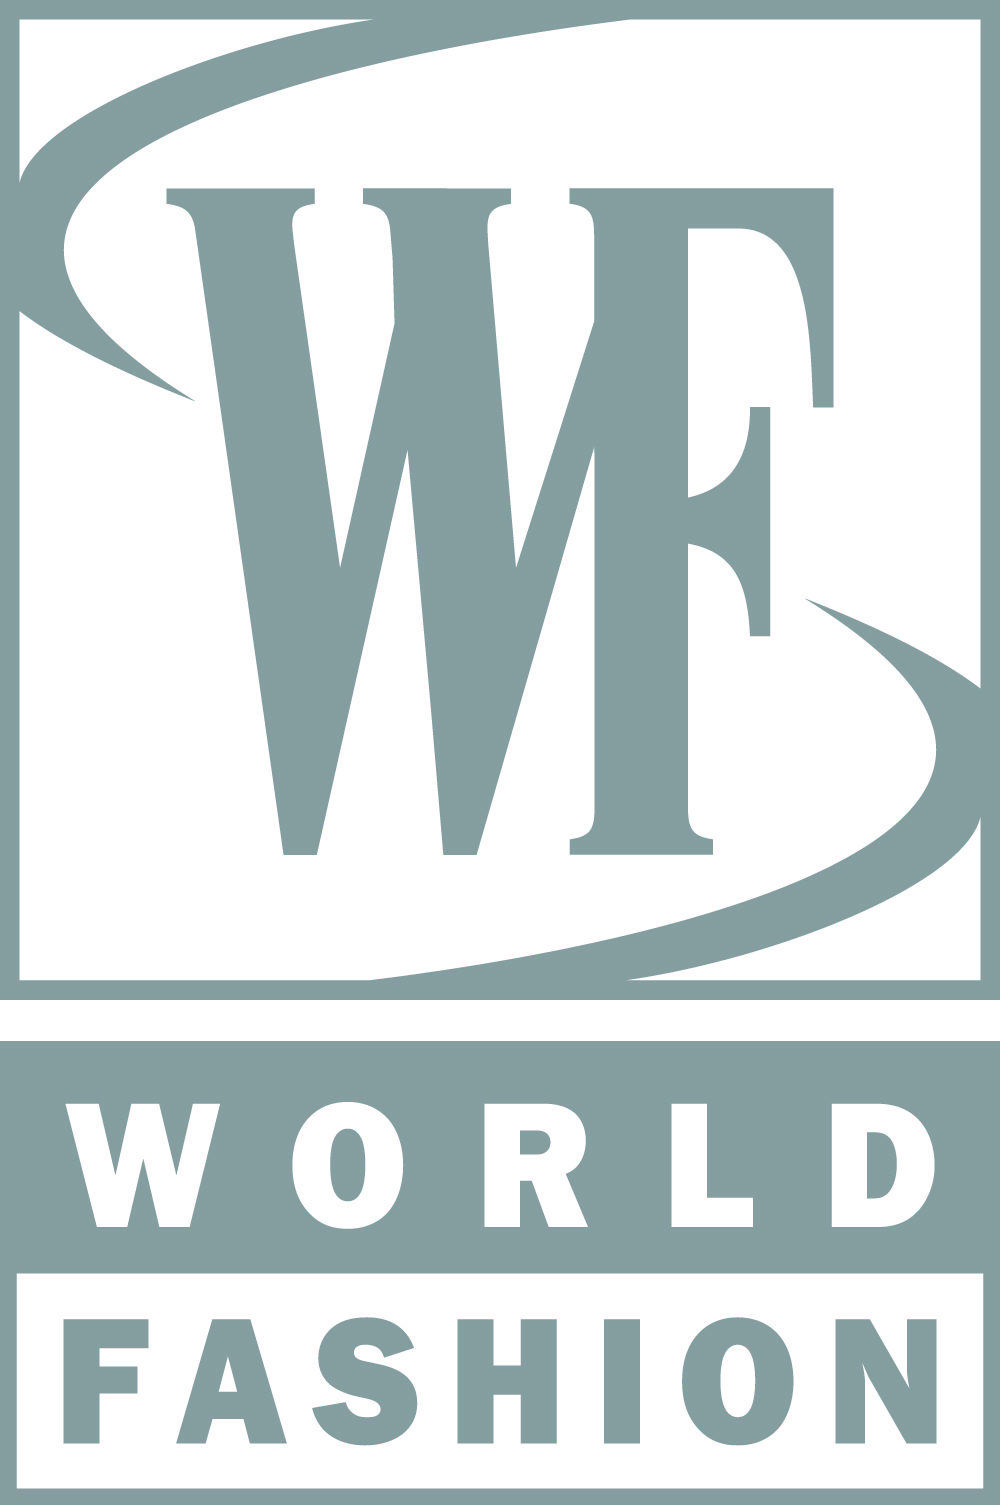 Style Channel Logo - World Fashion Channel